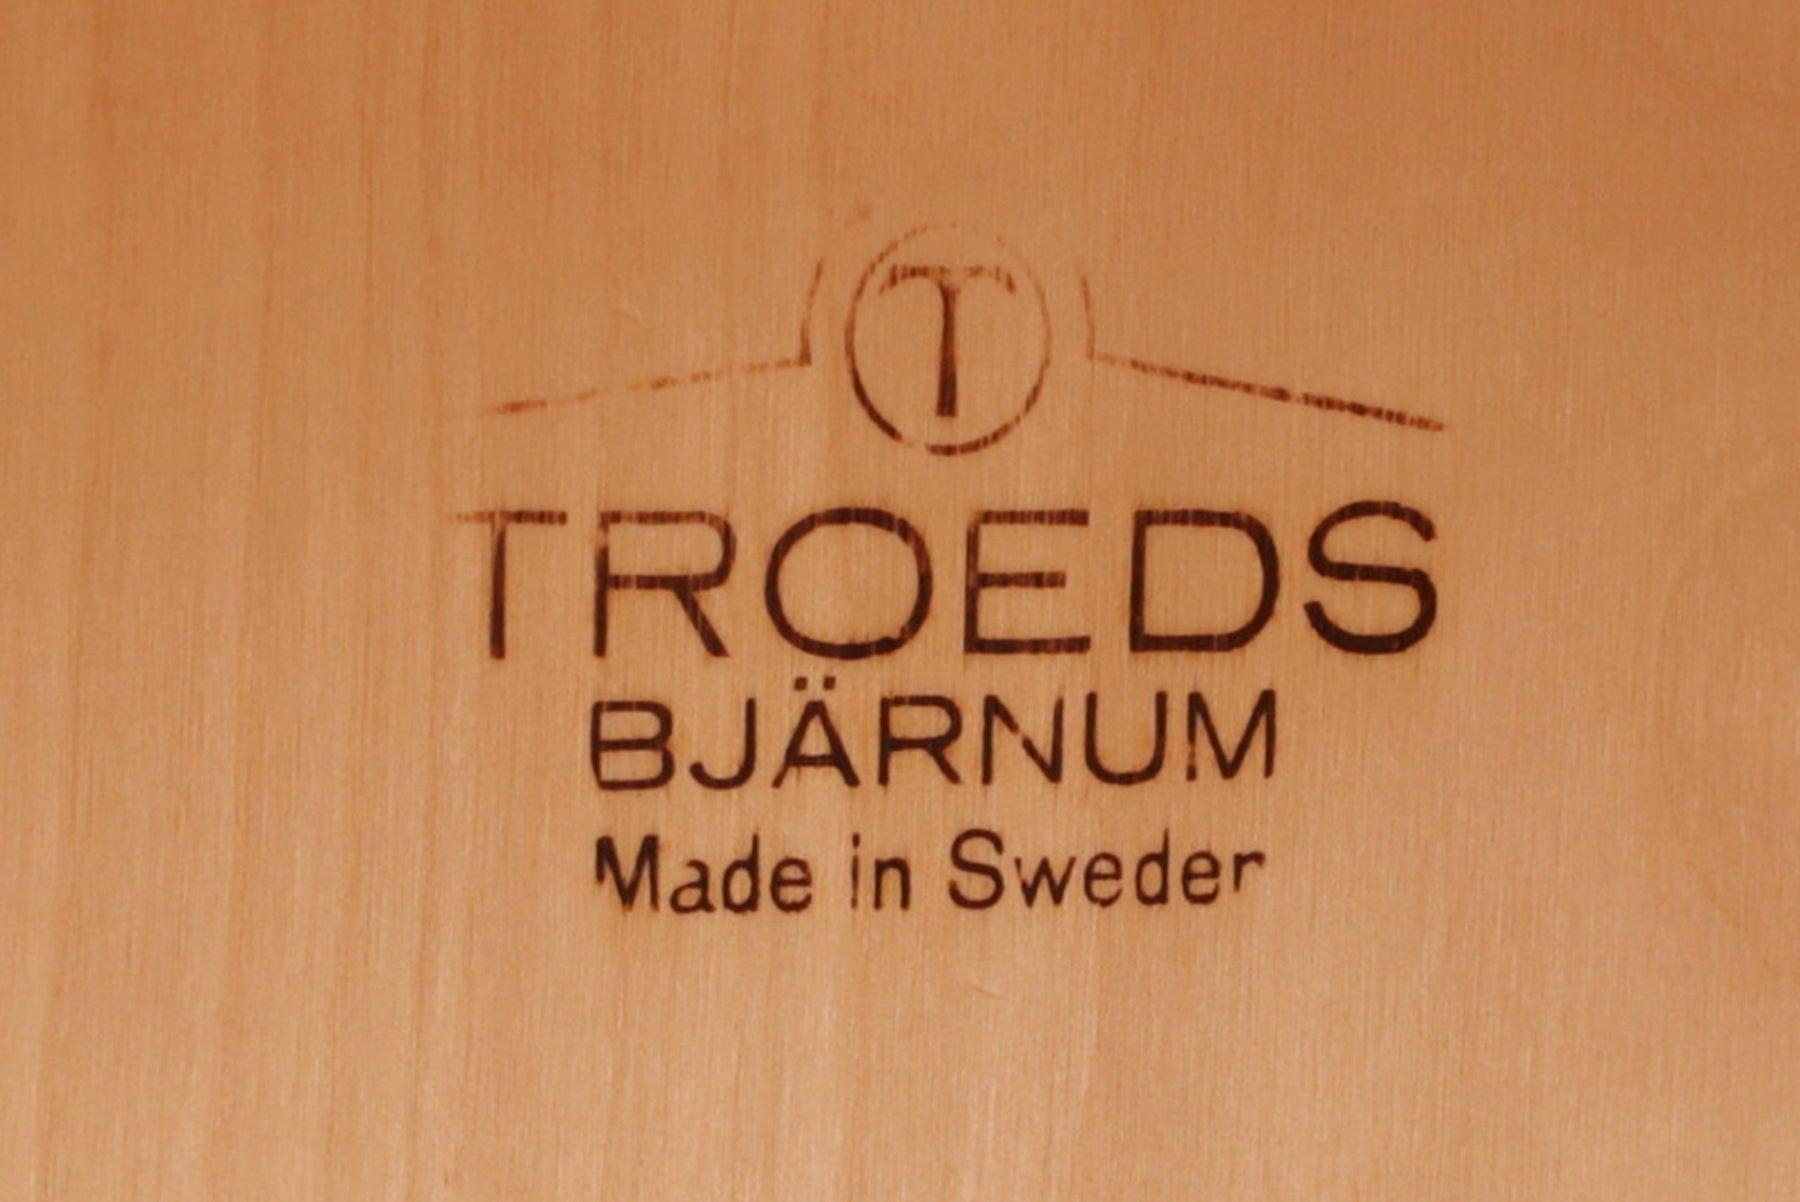 Origin: Sweden
Designer: Nils Jonsson
Manufacturer: Troeds Bjärnum
Era: 1960s
Materials: Teak
Measurements: 63? wide x 17? deep x 30? tall

Condition: In excellent original condition.